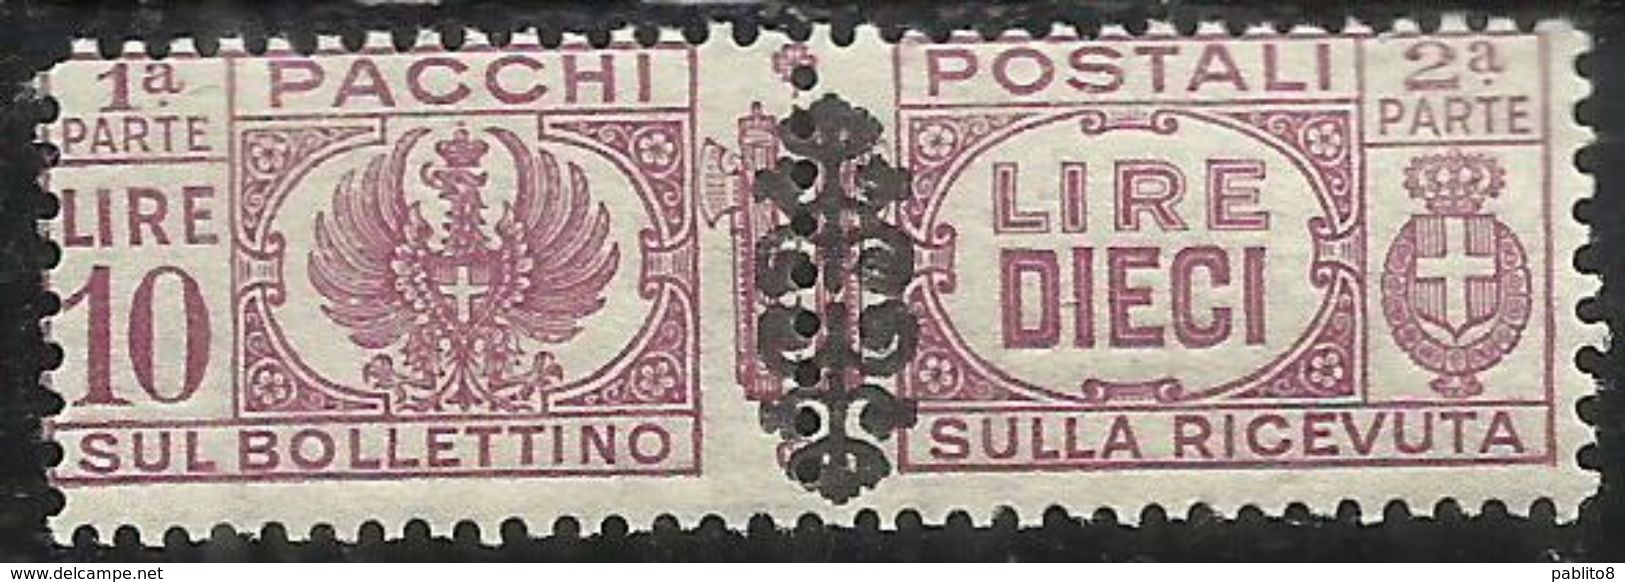 ITALIA REGNO ITALY KINGDOM 1945 LUOGOTENENZA PACCHI POSTALI PARCEL POST FREGIO LIRE 10 MNH - Paketmarken